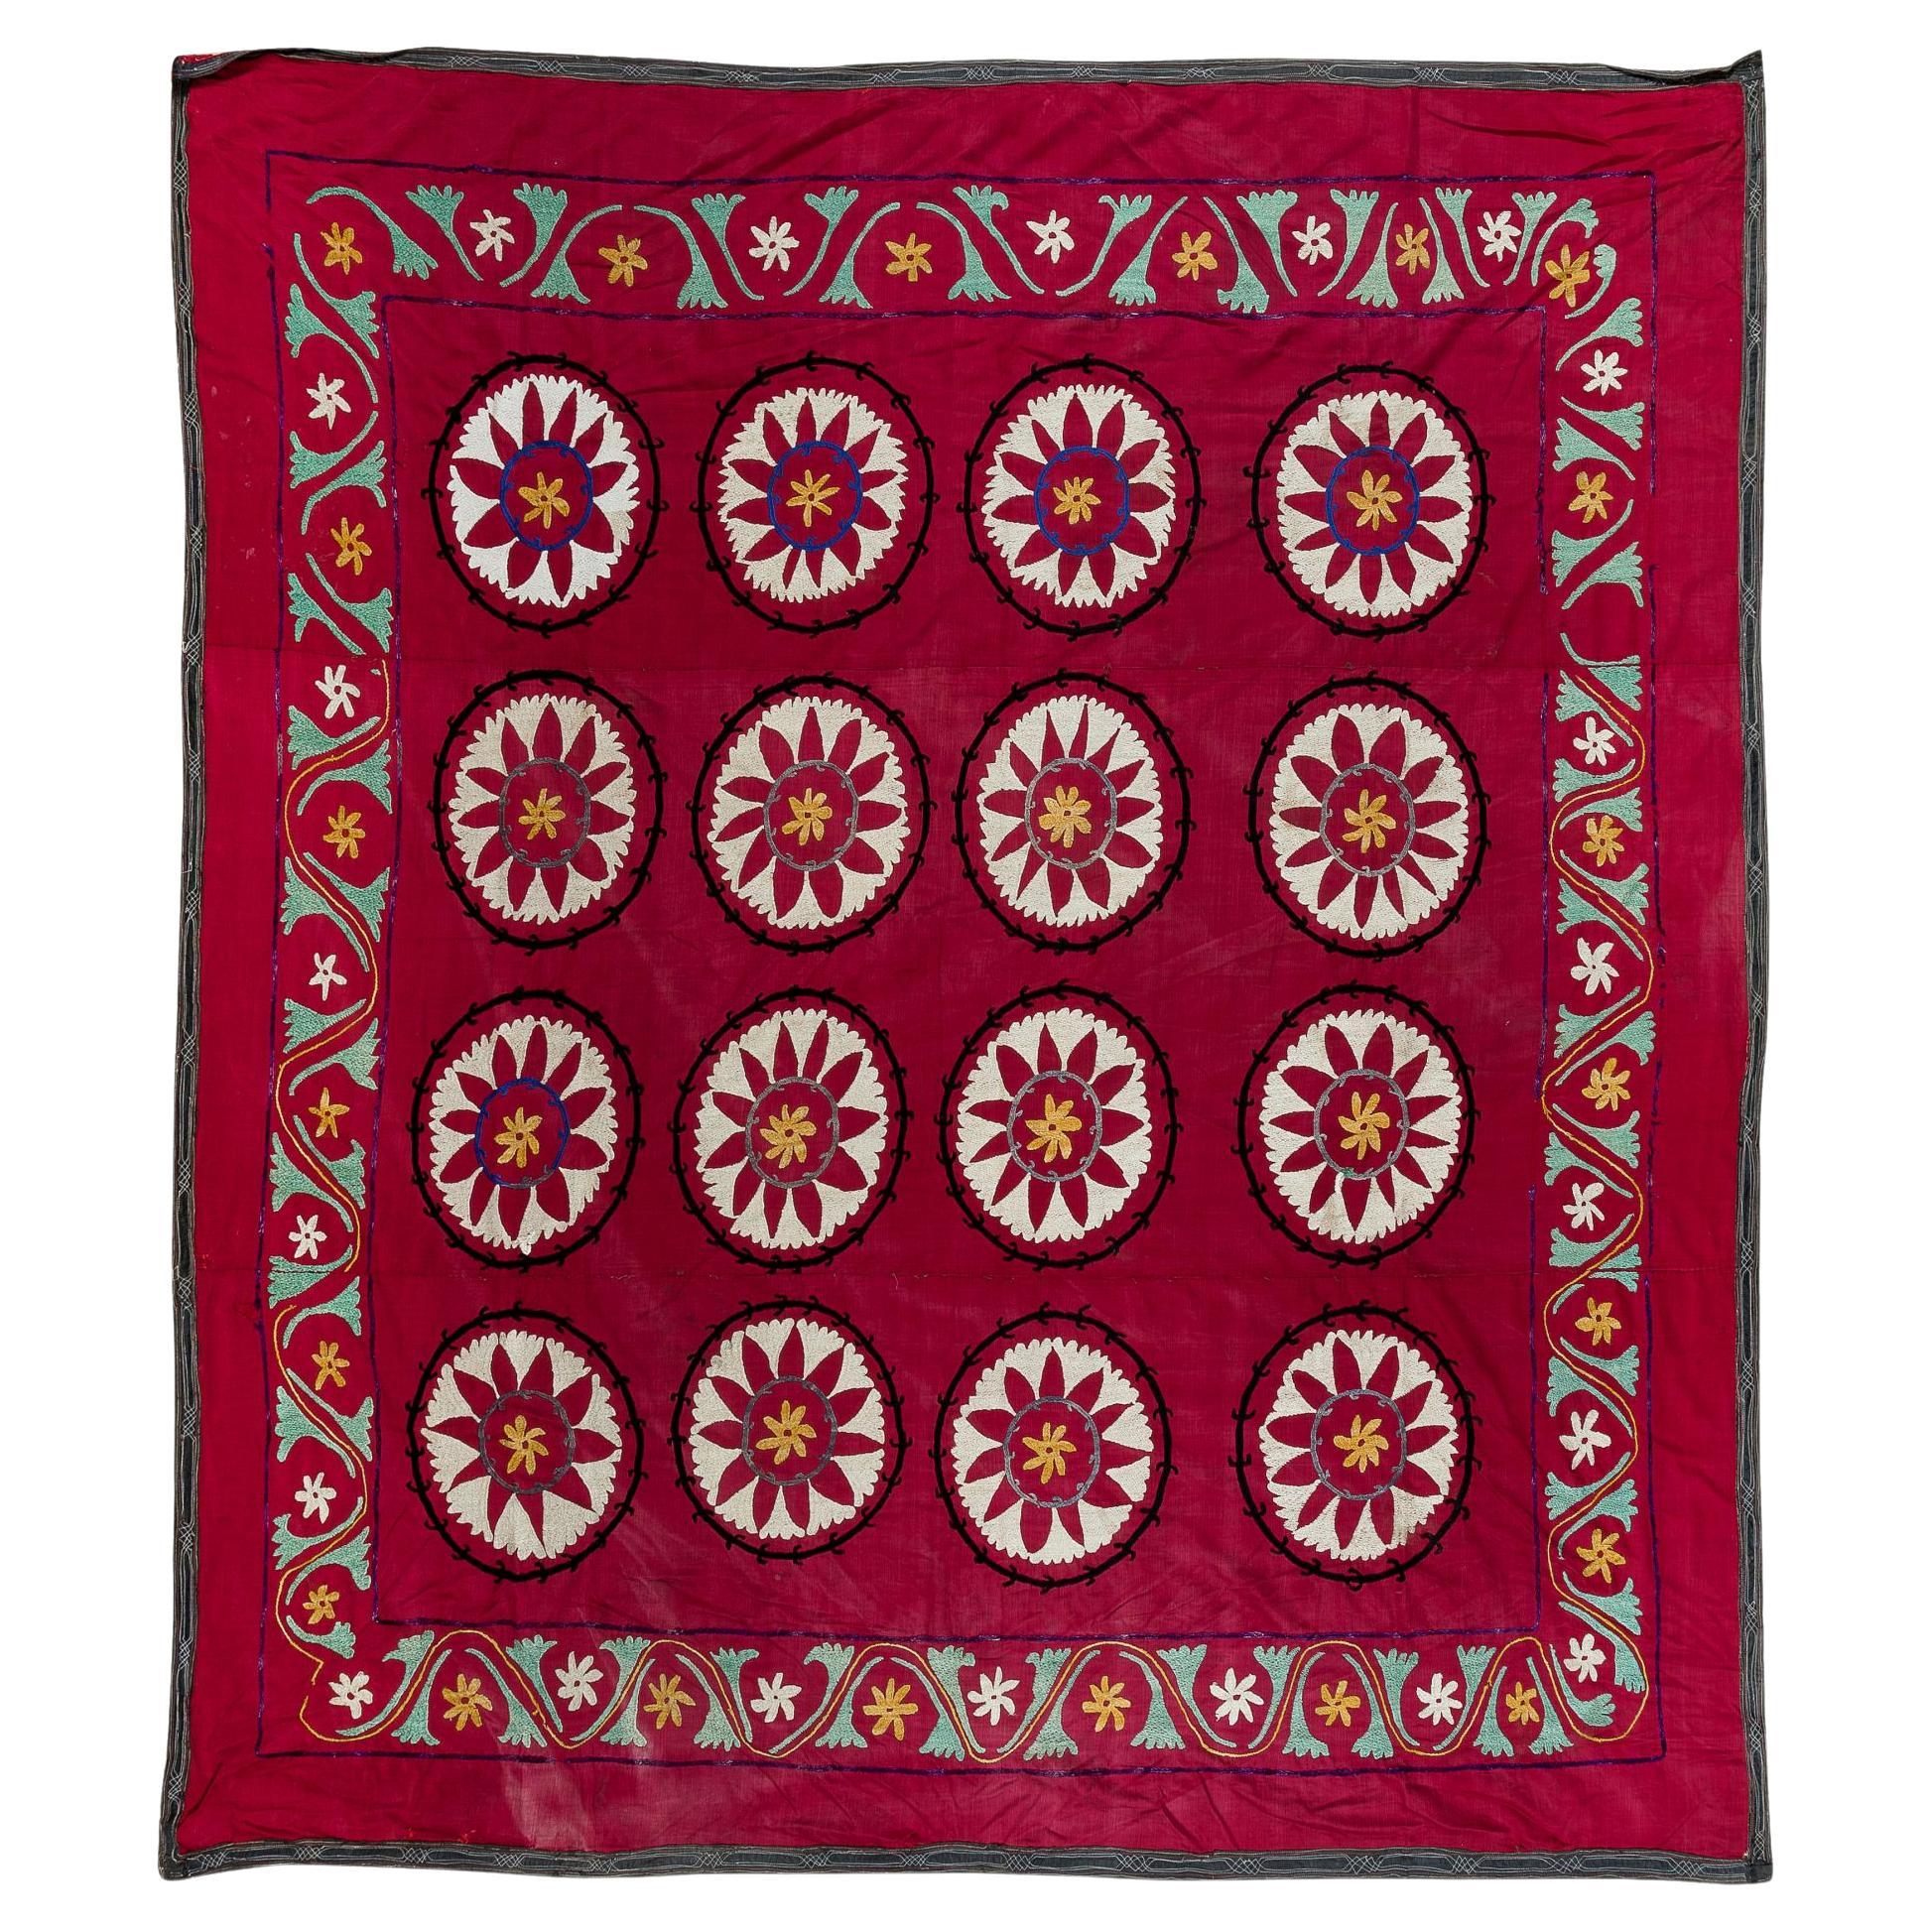 6.9x6.9 Ft Vintage Seide Handstickerei Rotes Bettbezug, asiatische Suzani Wandbehangsstickerei